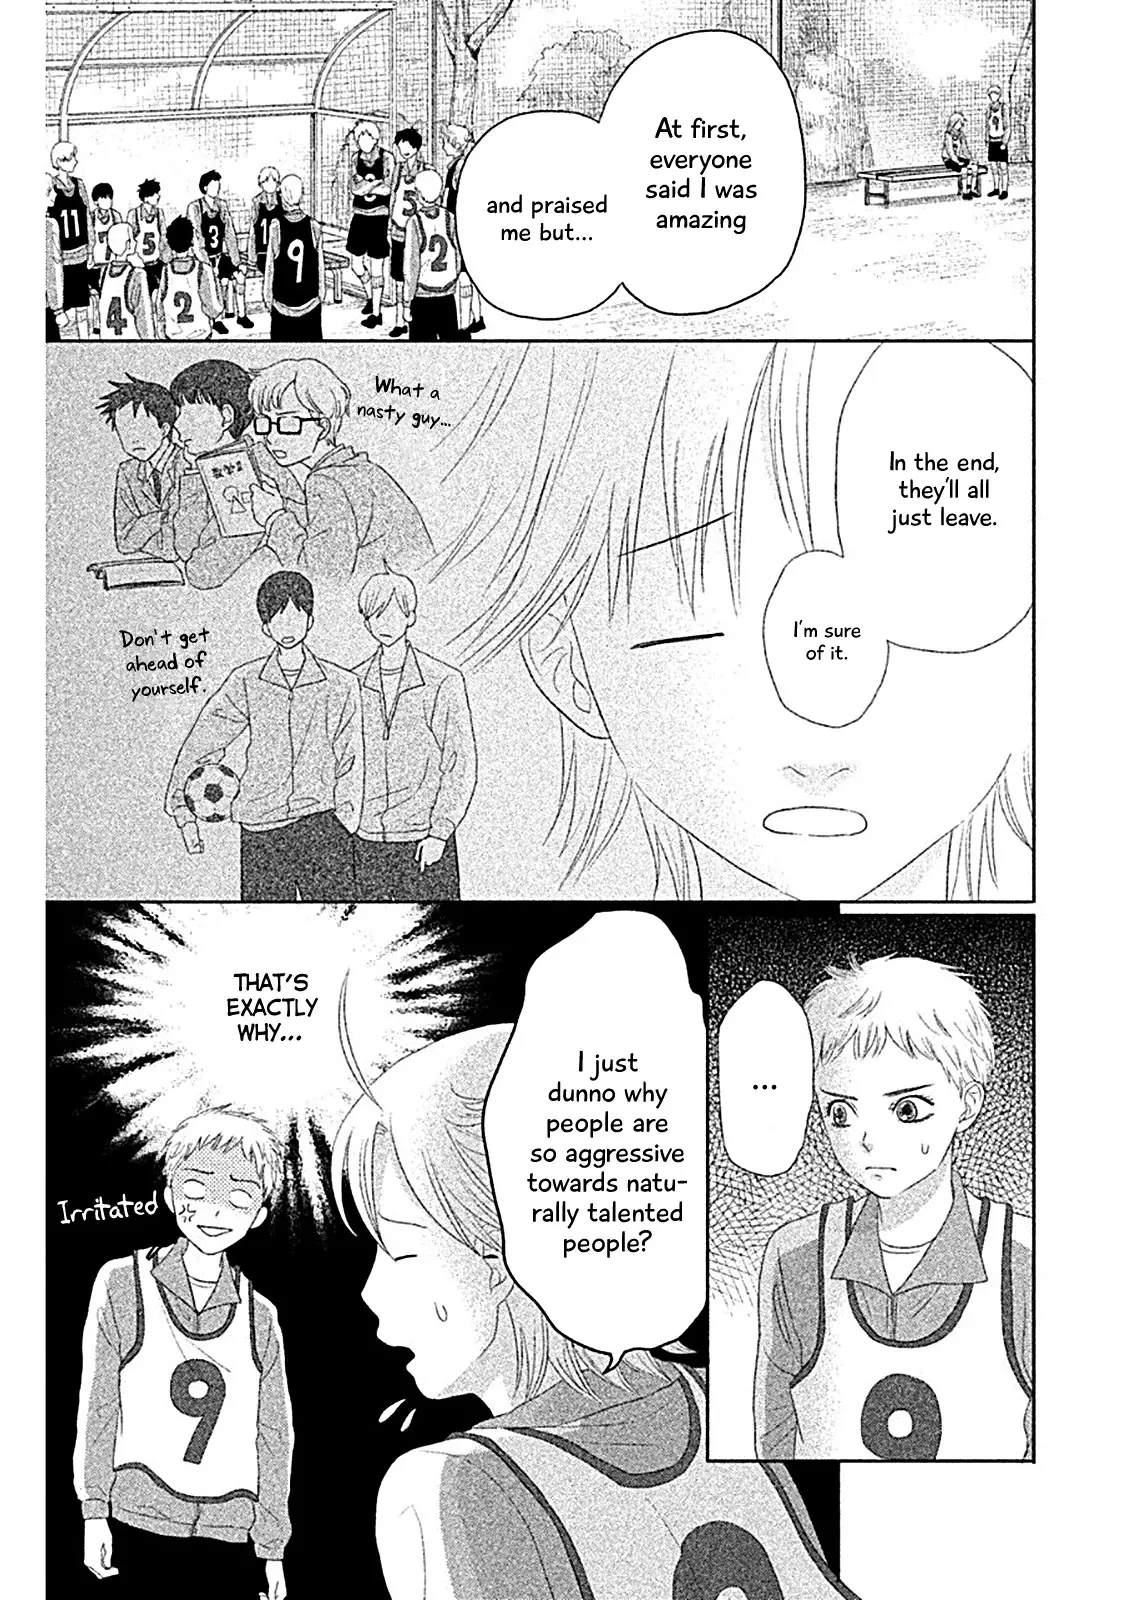 Chihayafuru: Middle School Arc - 4 page 16